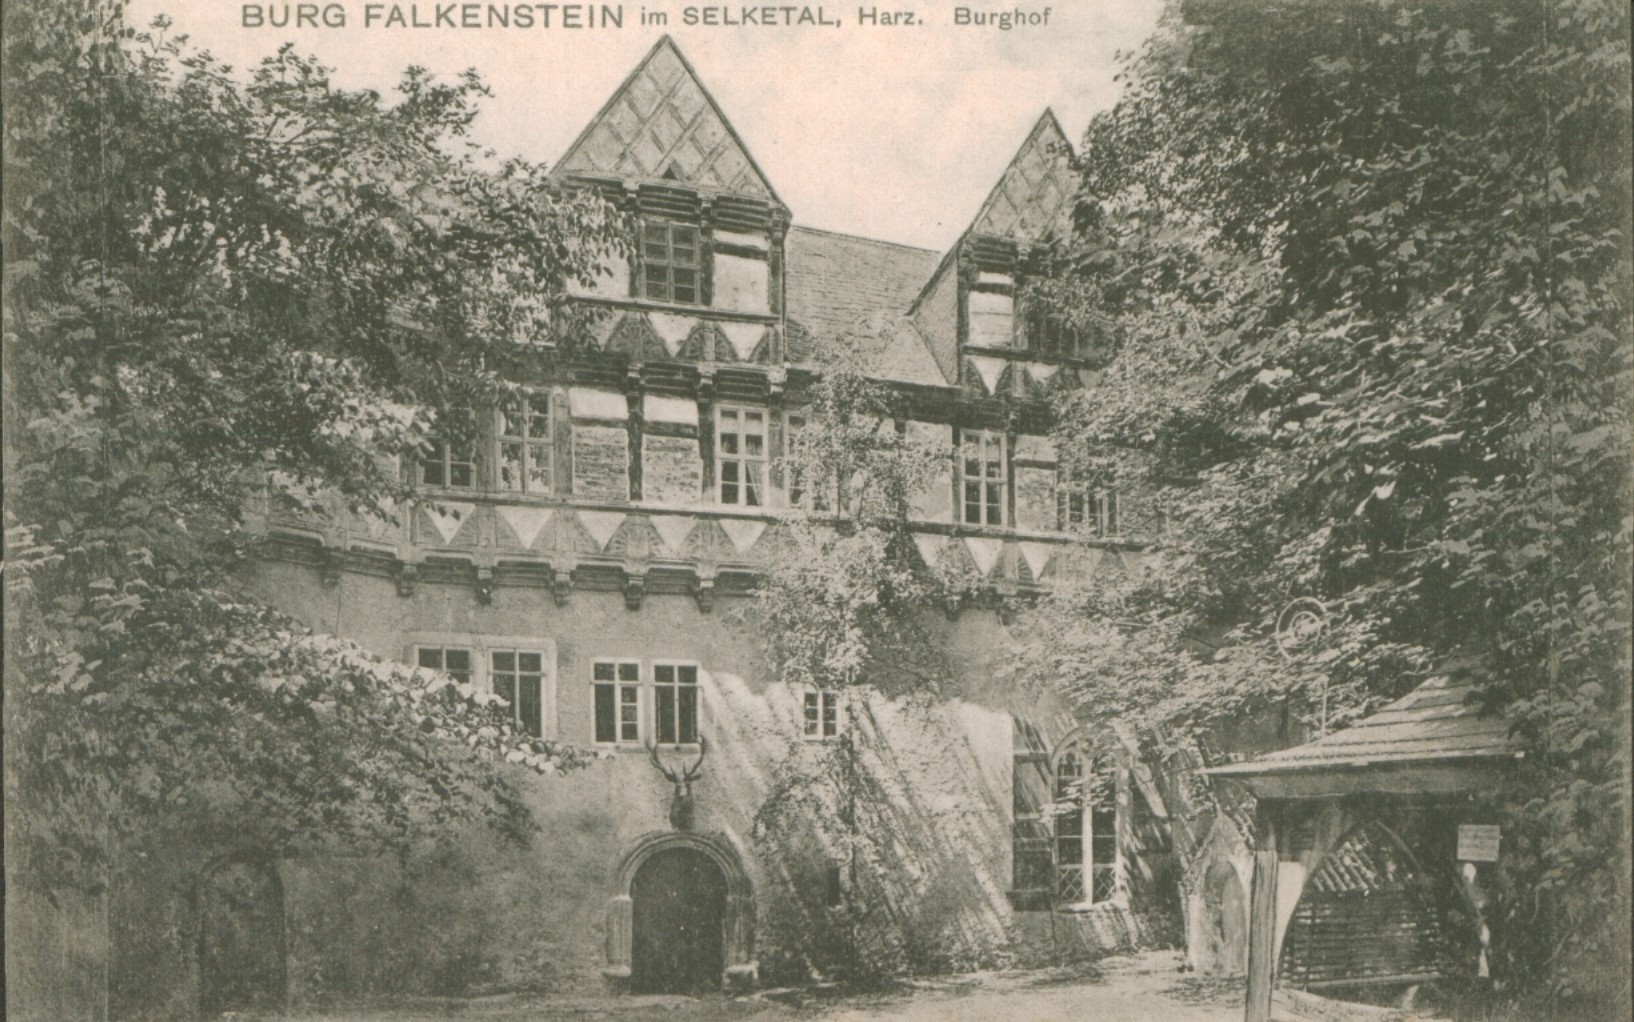 Ansichtskarte Burg Falkenstein im Selketal, Burghof. (Kulturstiftung Sachsen-Anhalt CC BY-NC-SA)